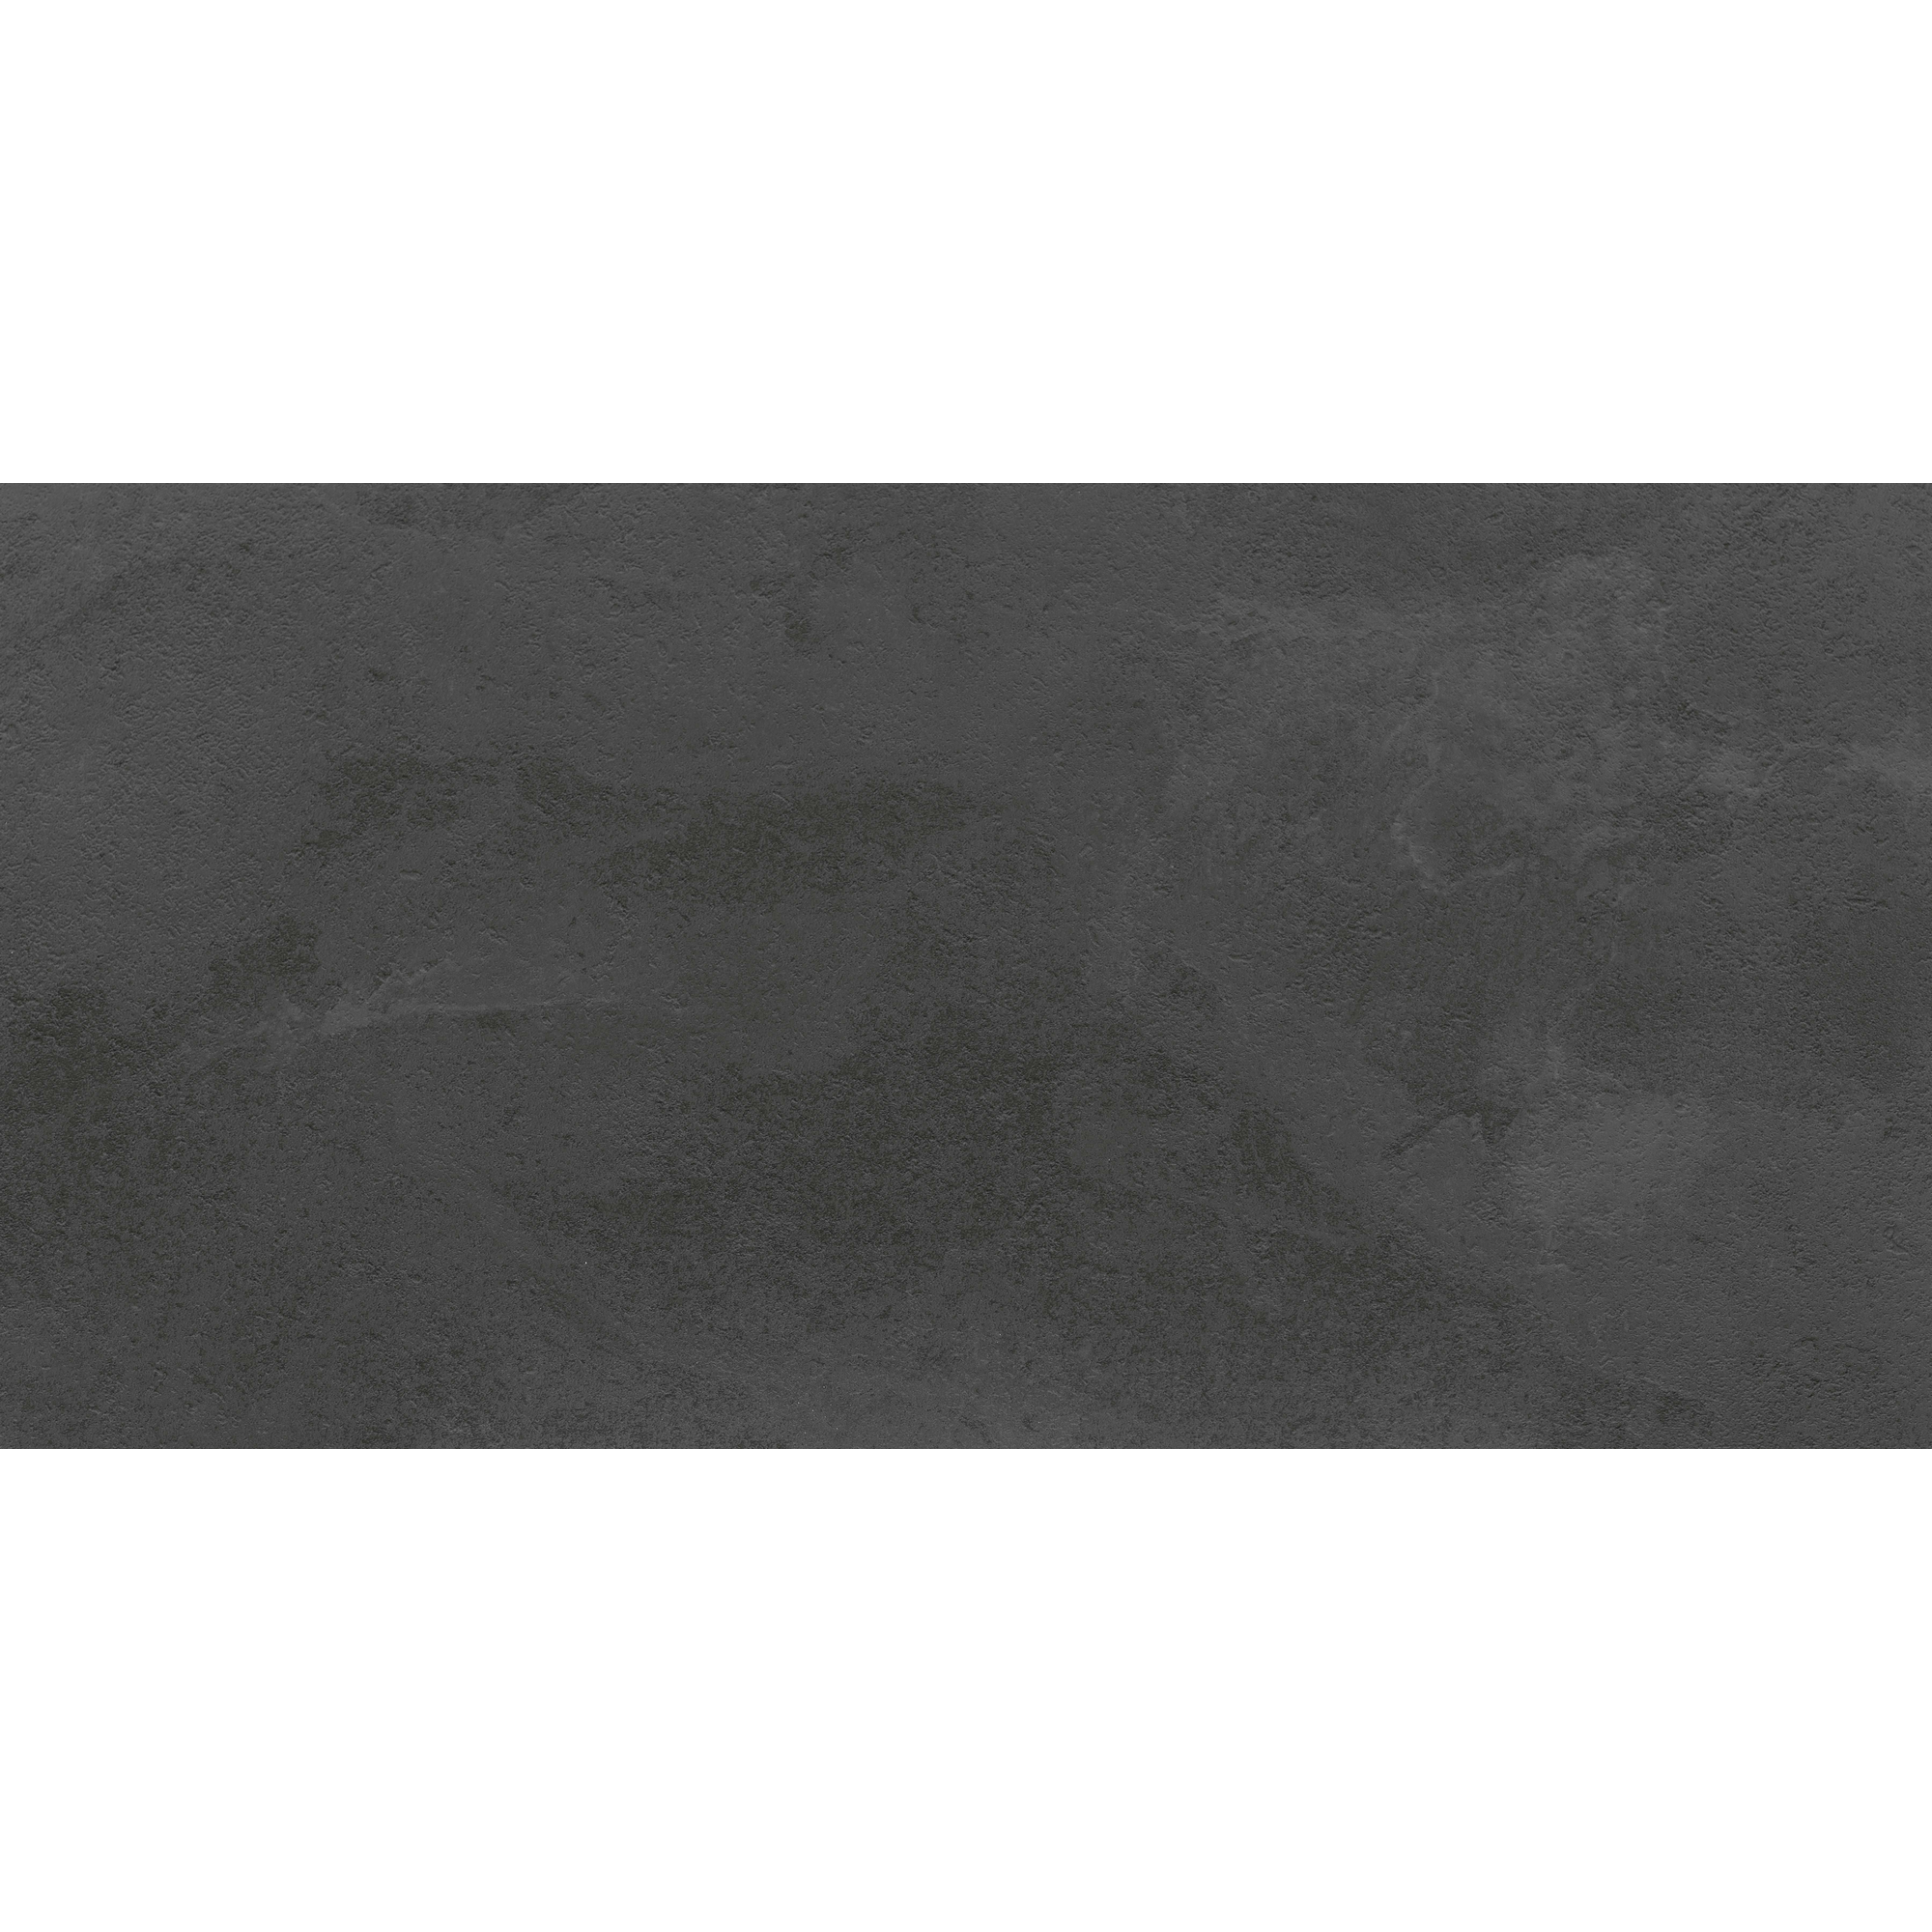 Vinylboden 'Rigid' Natural Slate grau 4 mm + product picture